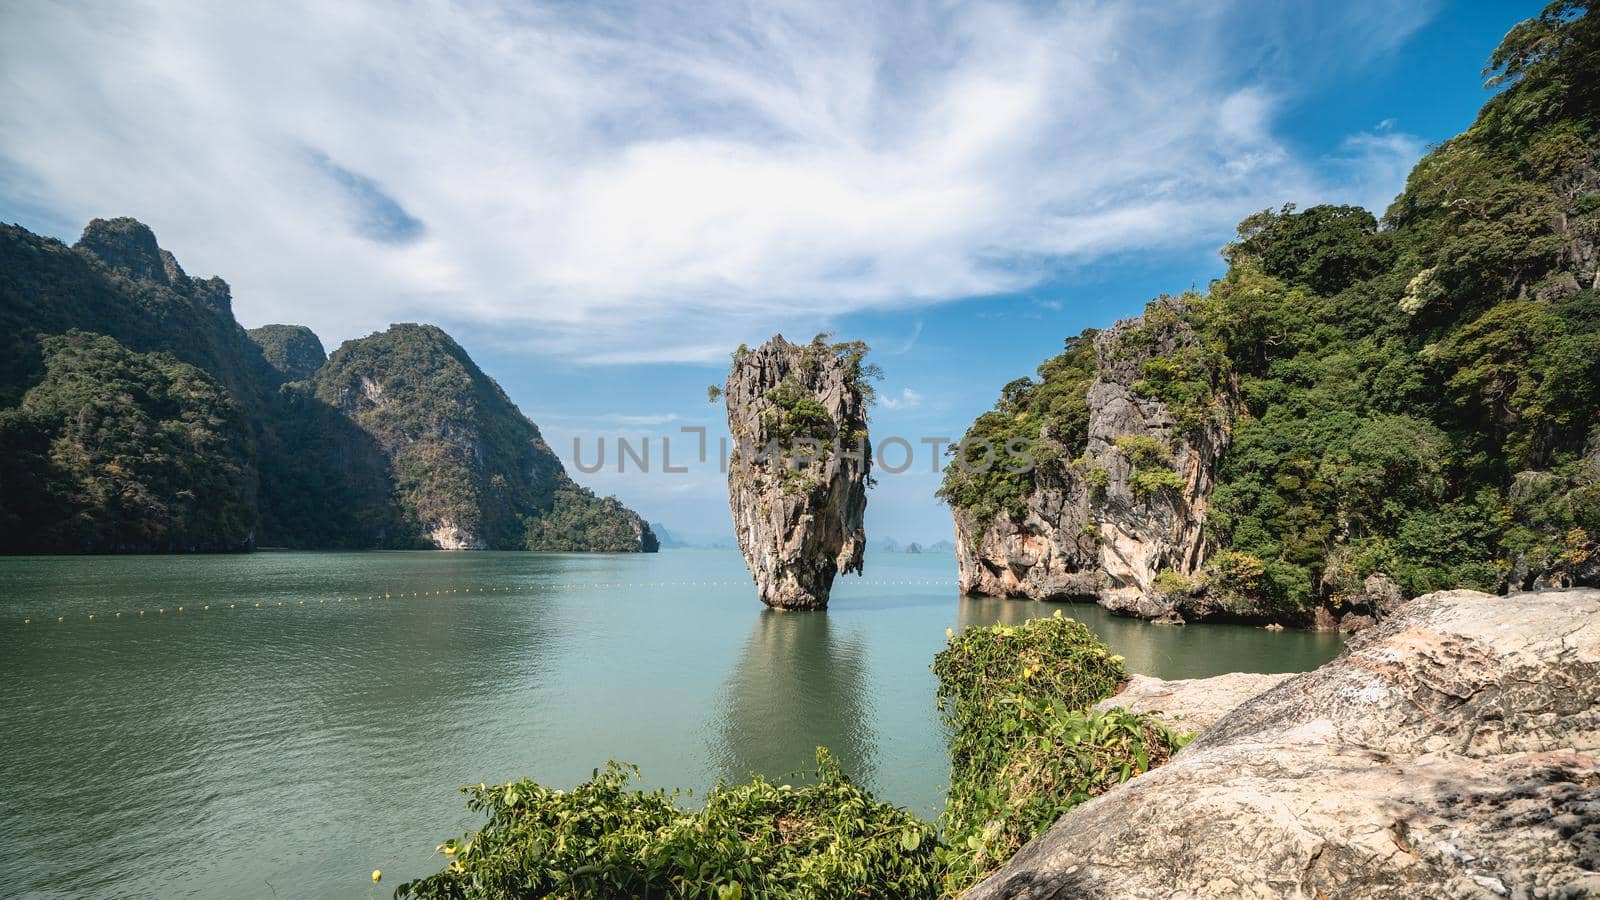 James Bond Island in Phang Nga Bay, Thailand by sirawit99